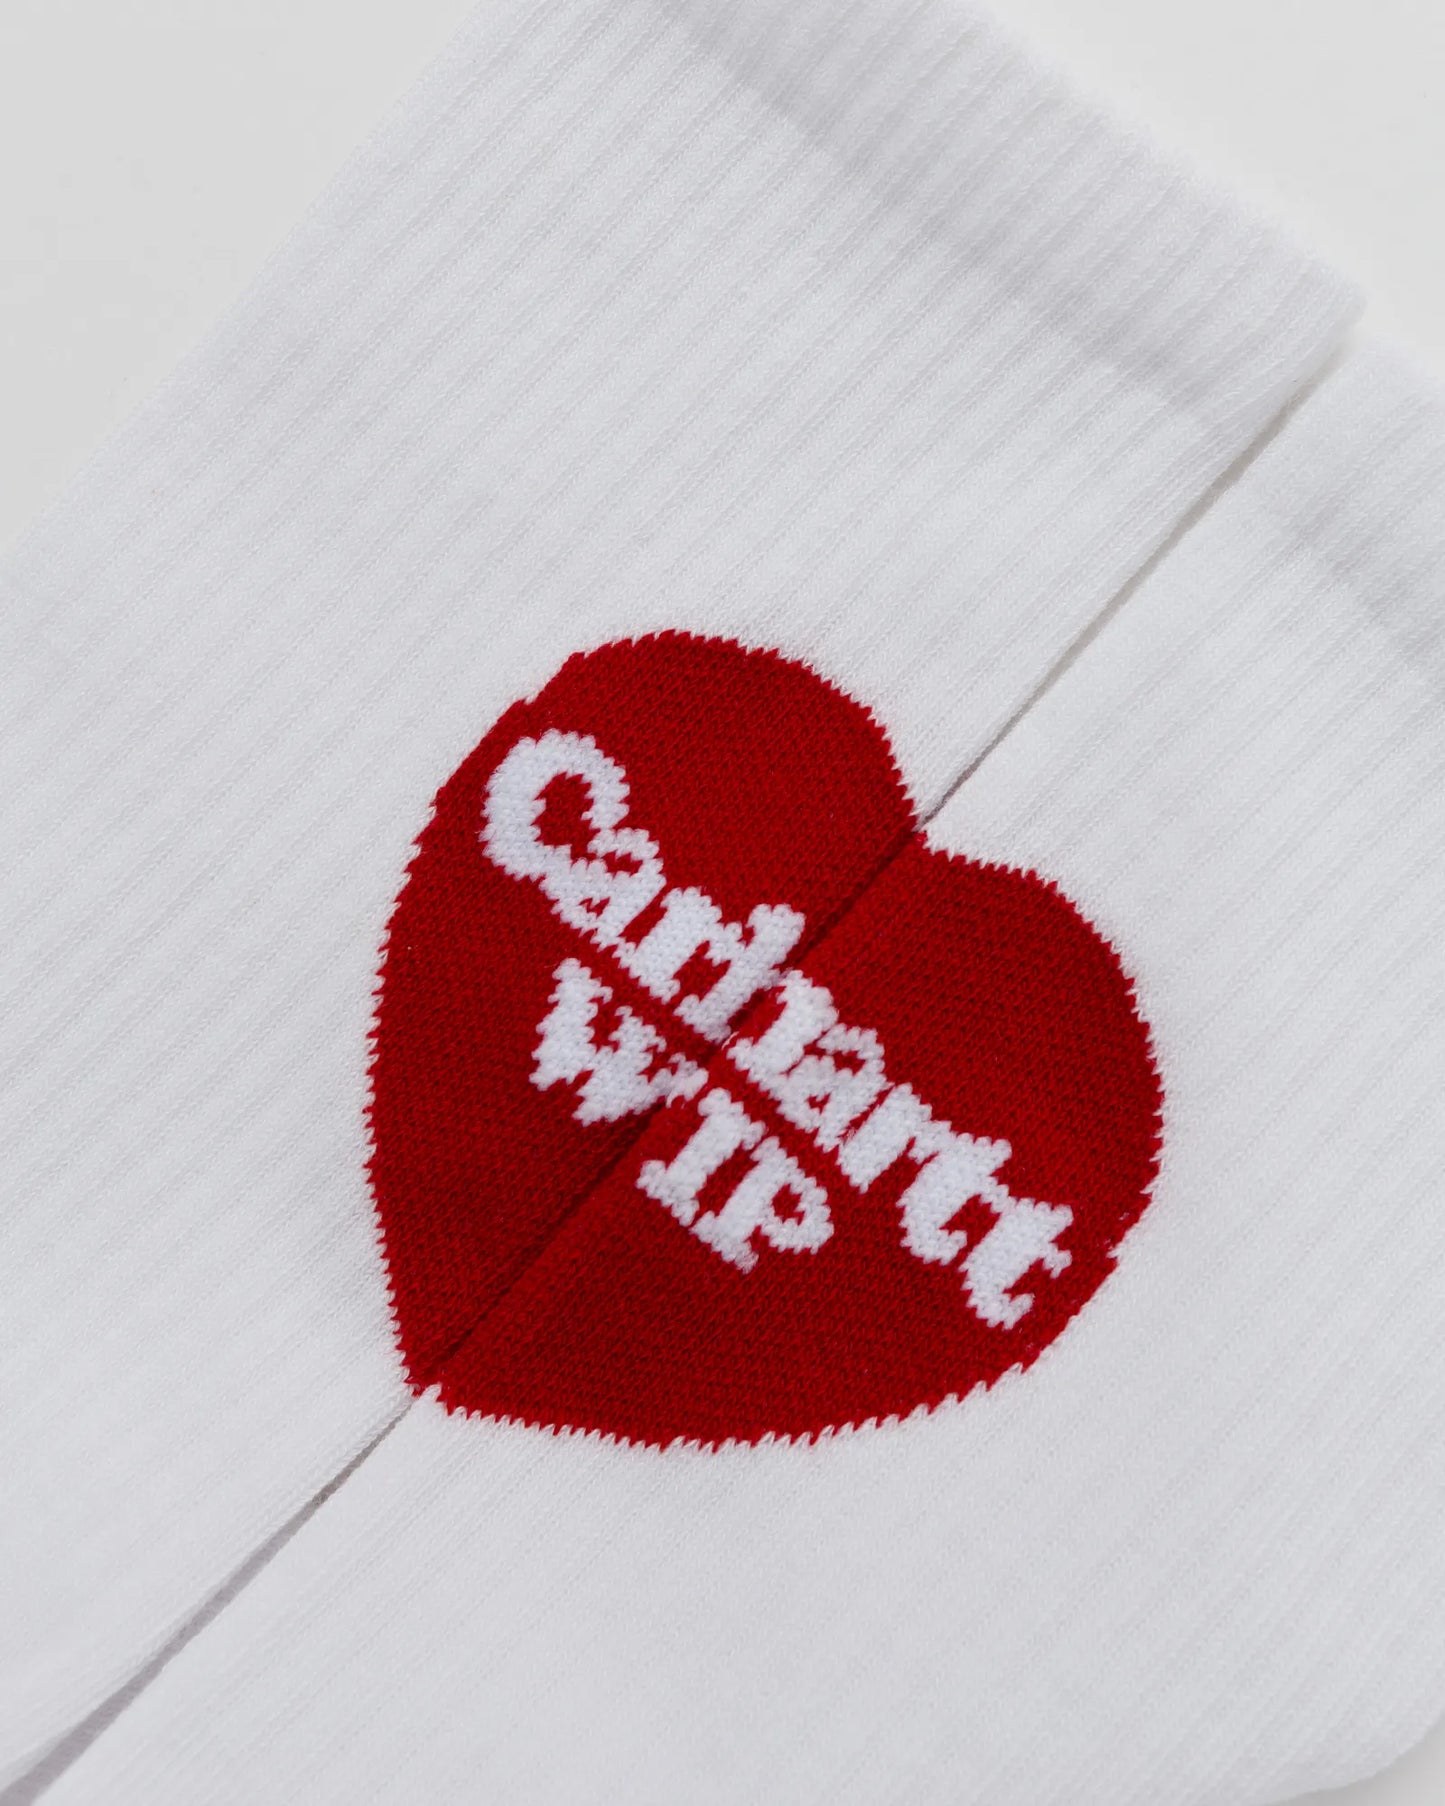 CARHARTT WIP HEART SOCKS - WHITE